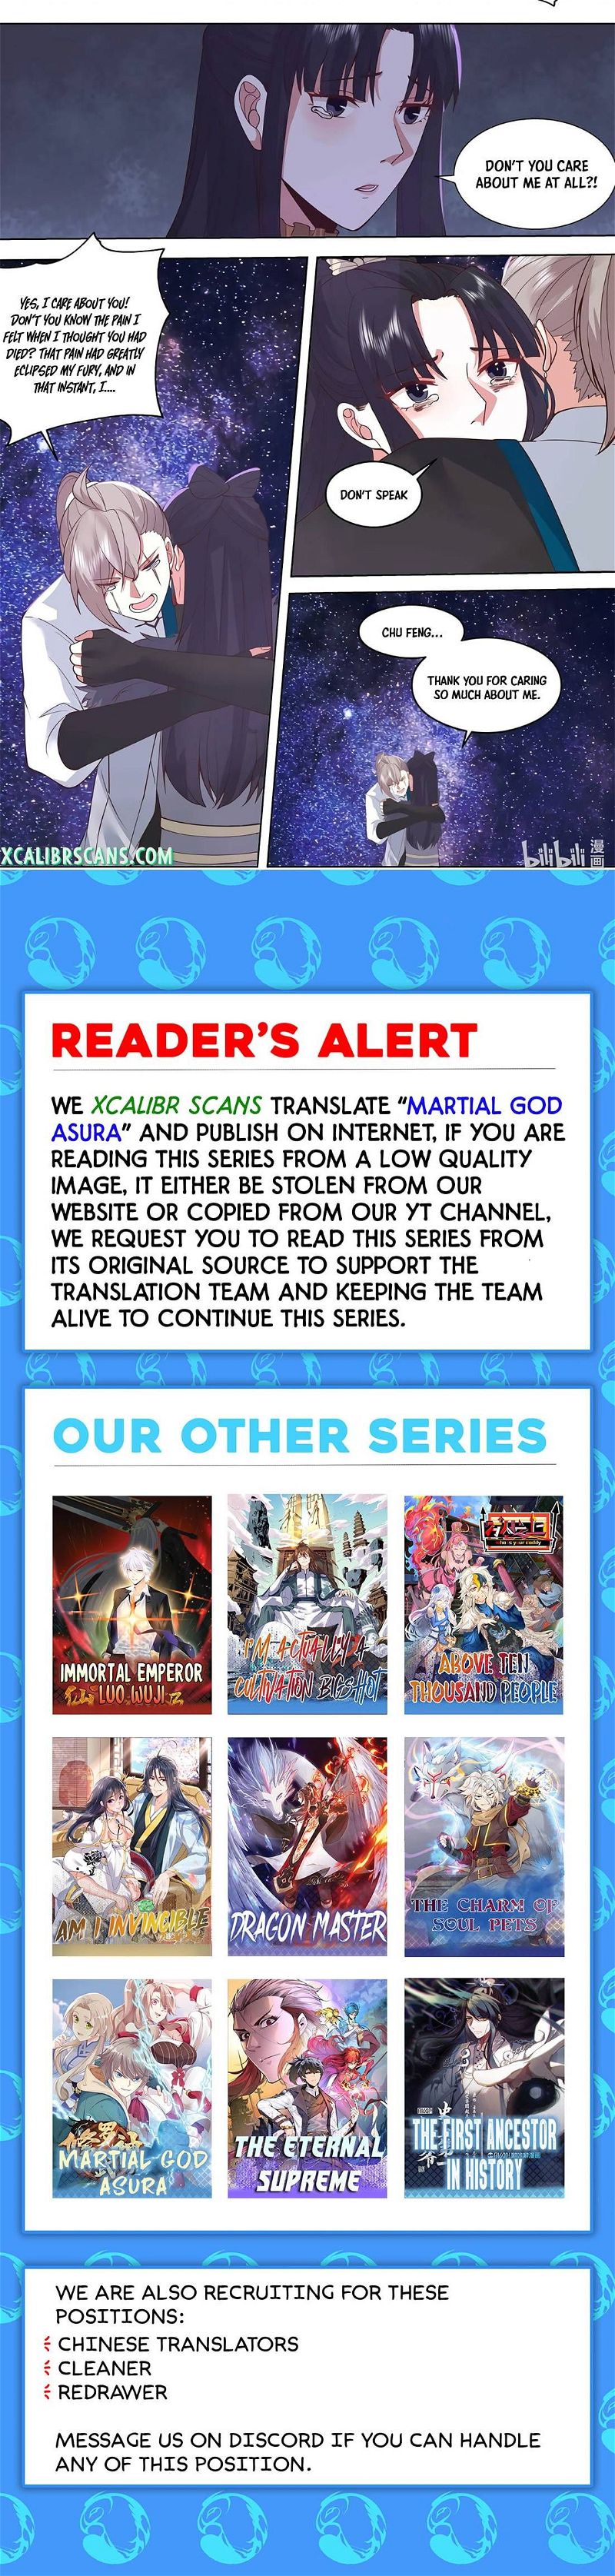 Martial God Asura Chapter 516 page 10